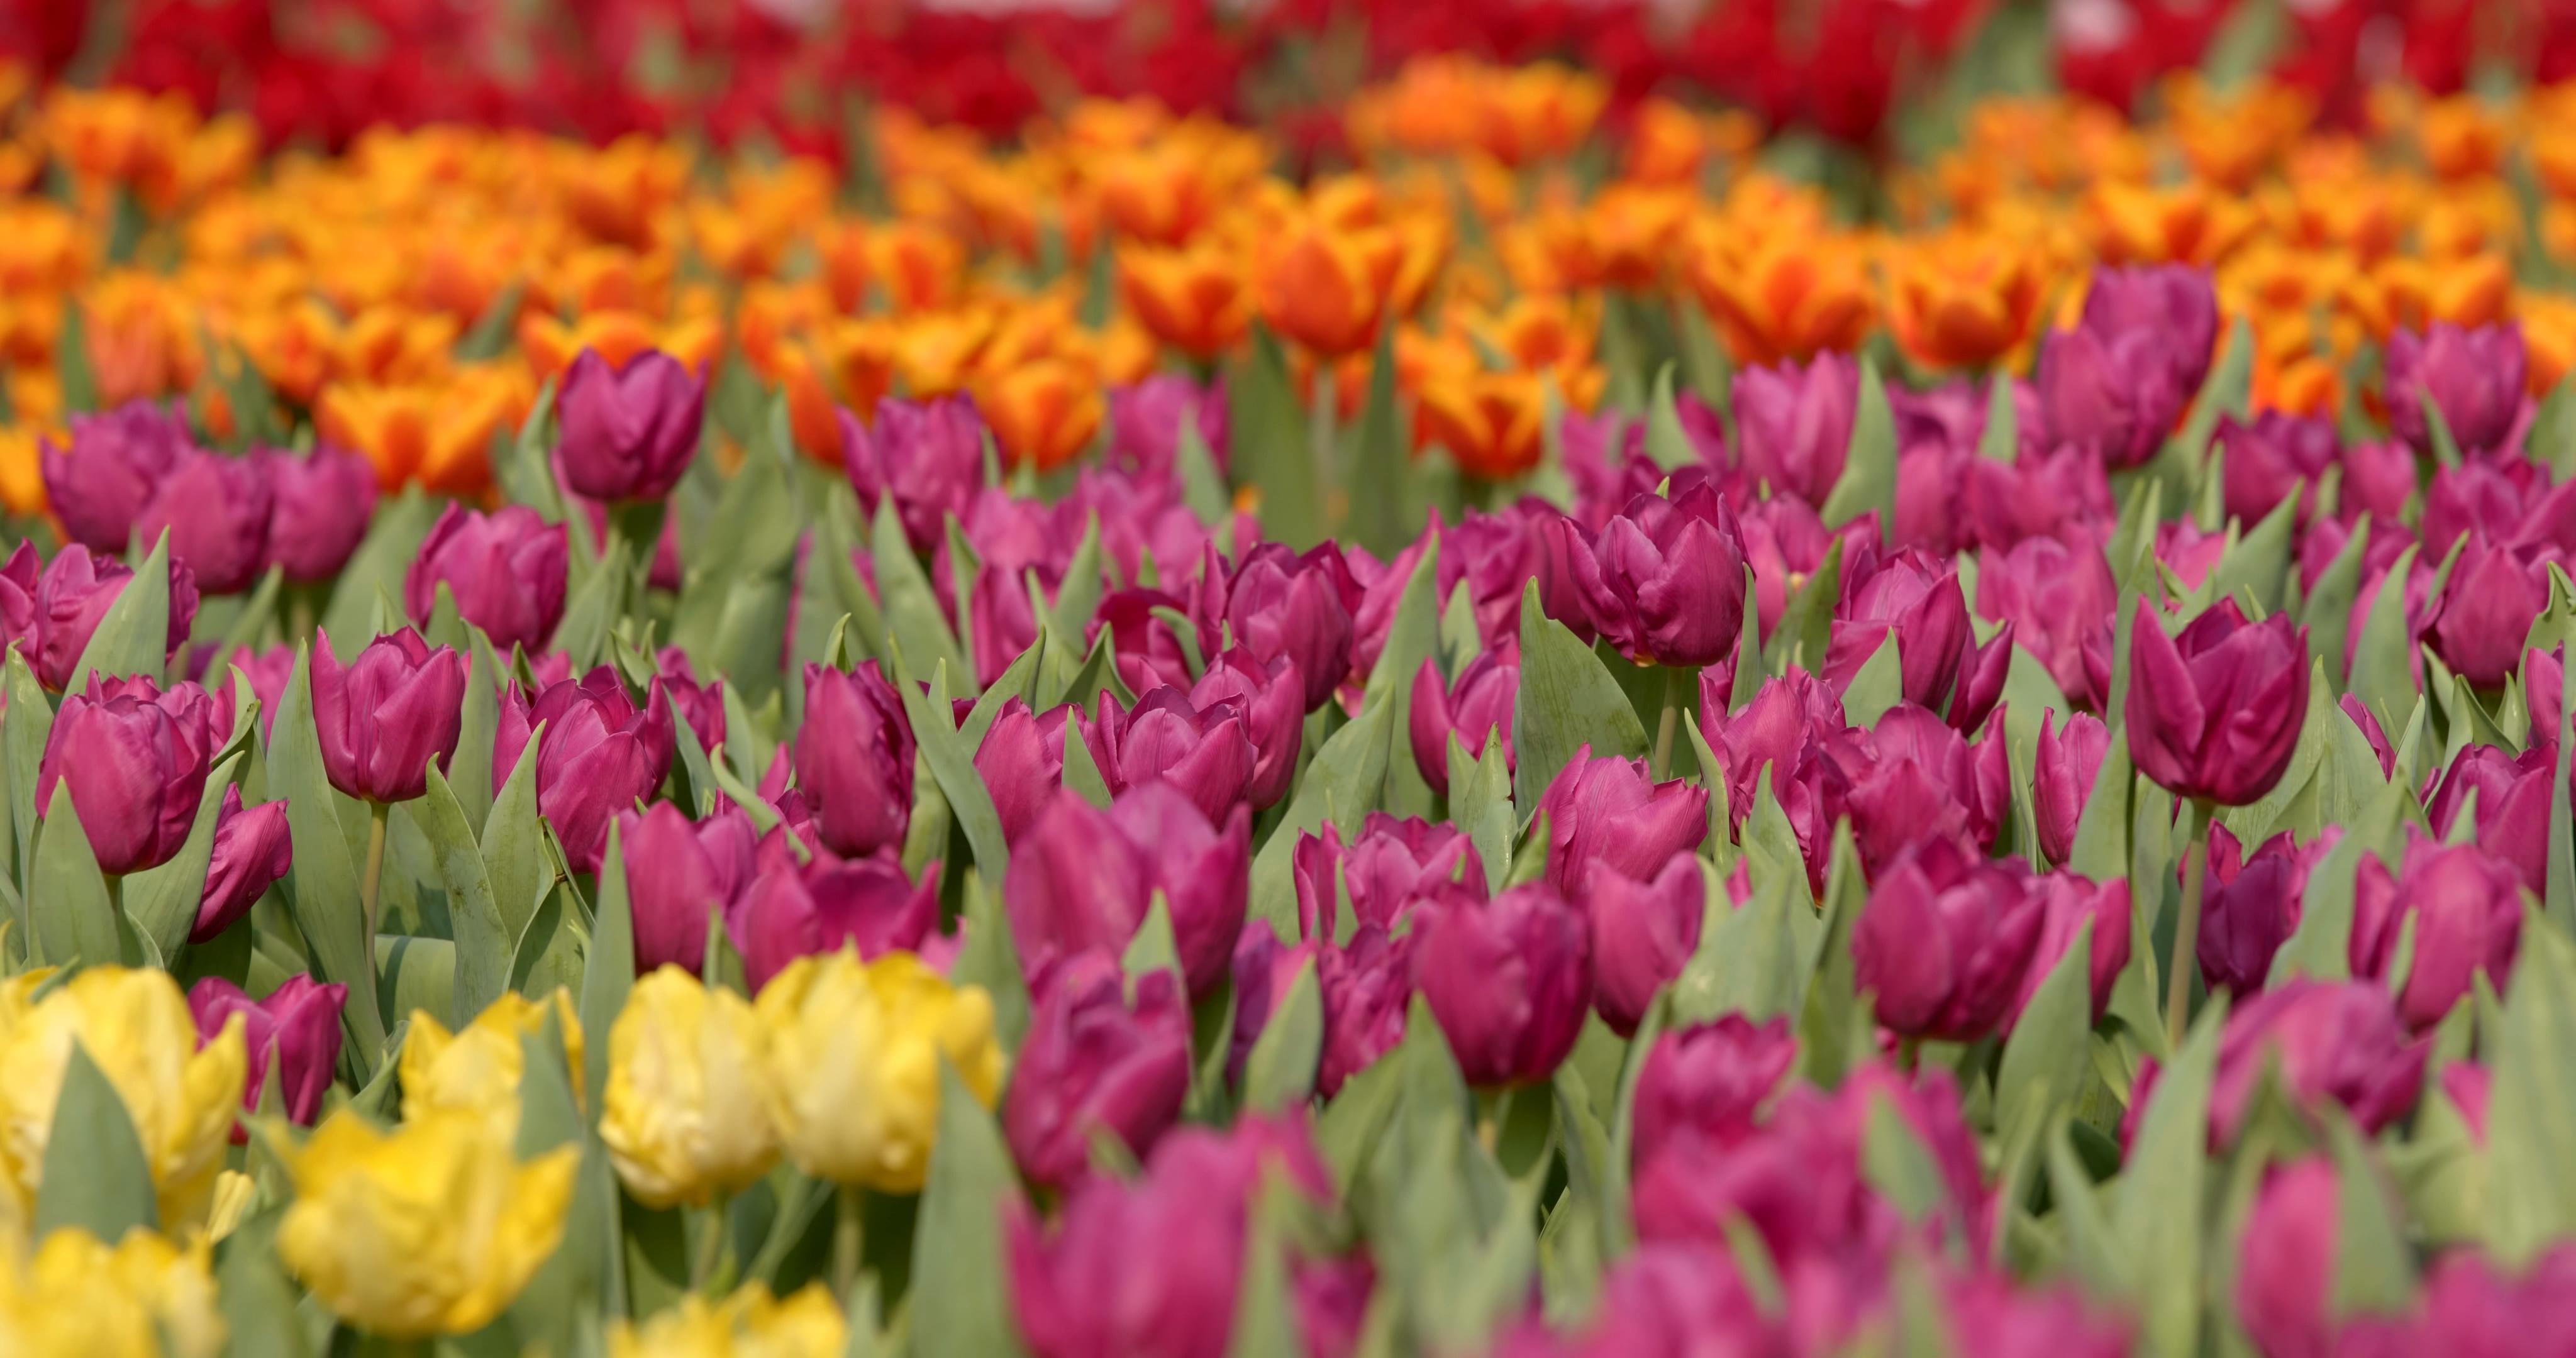 Beautiful fresh tulips garden ~ Stock Footage #87449248